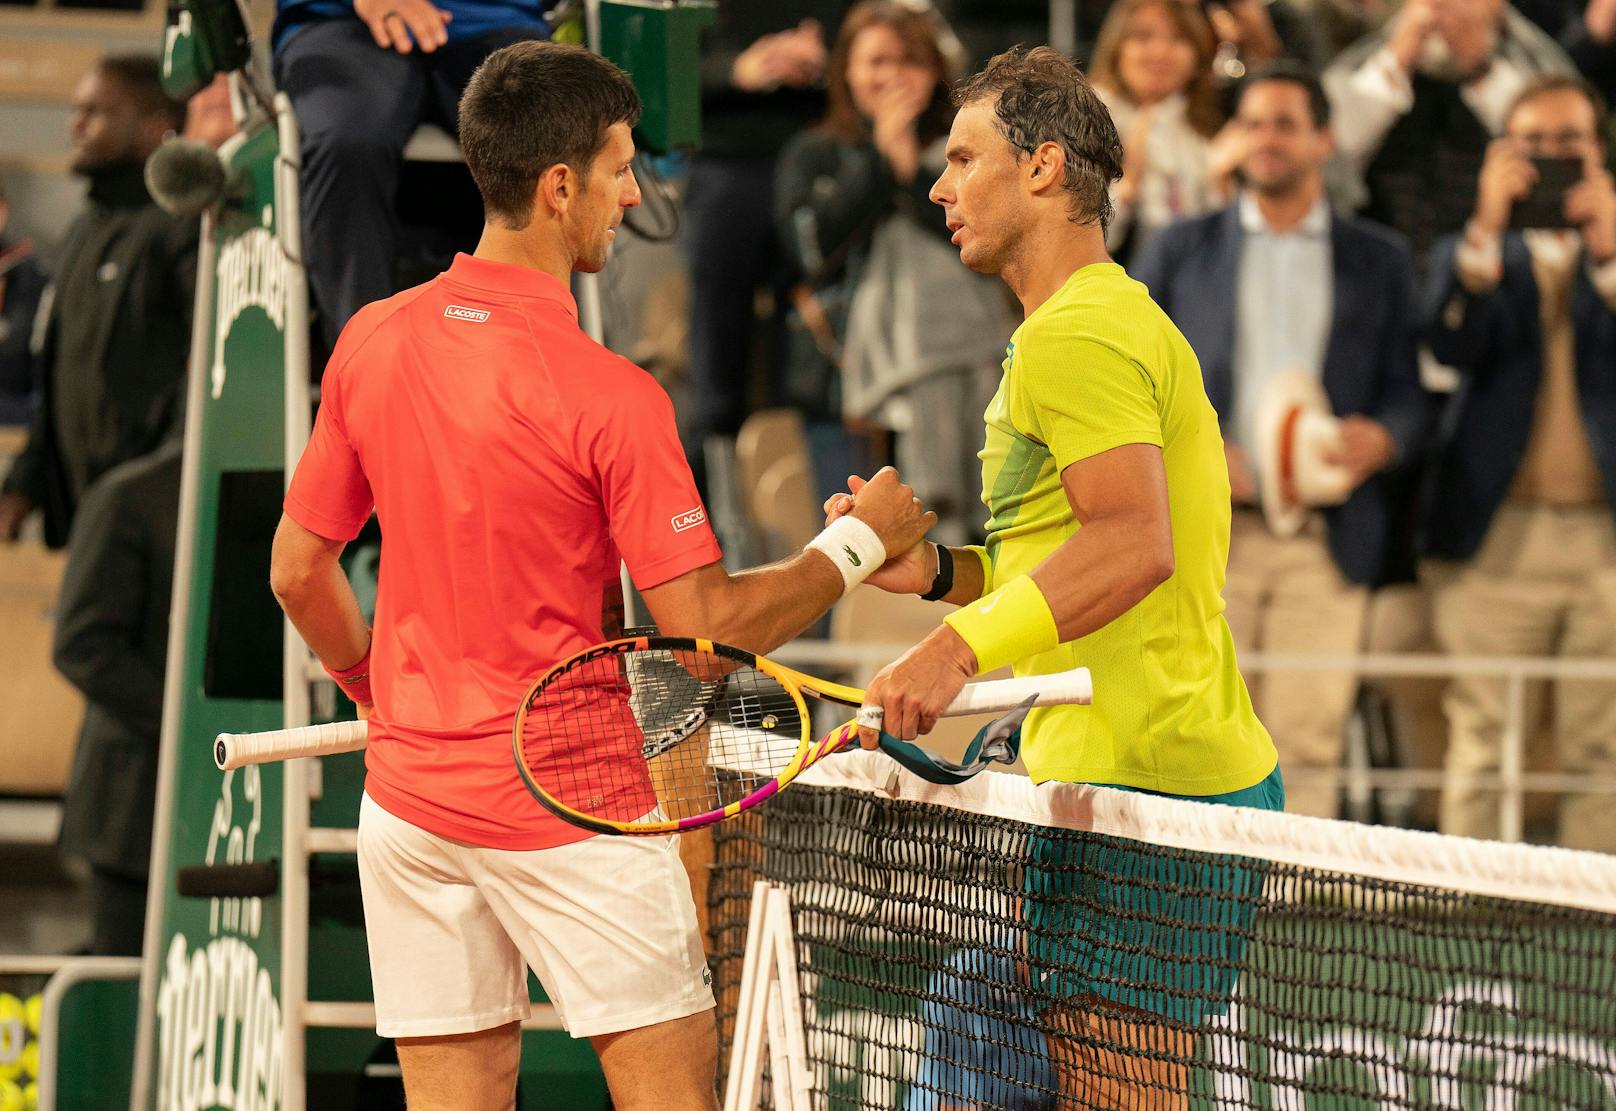 Djokovic darf wieder spielen – so reagiert Rivale Nadal